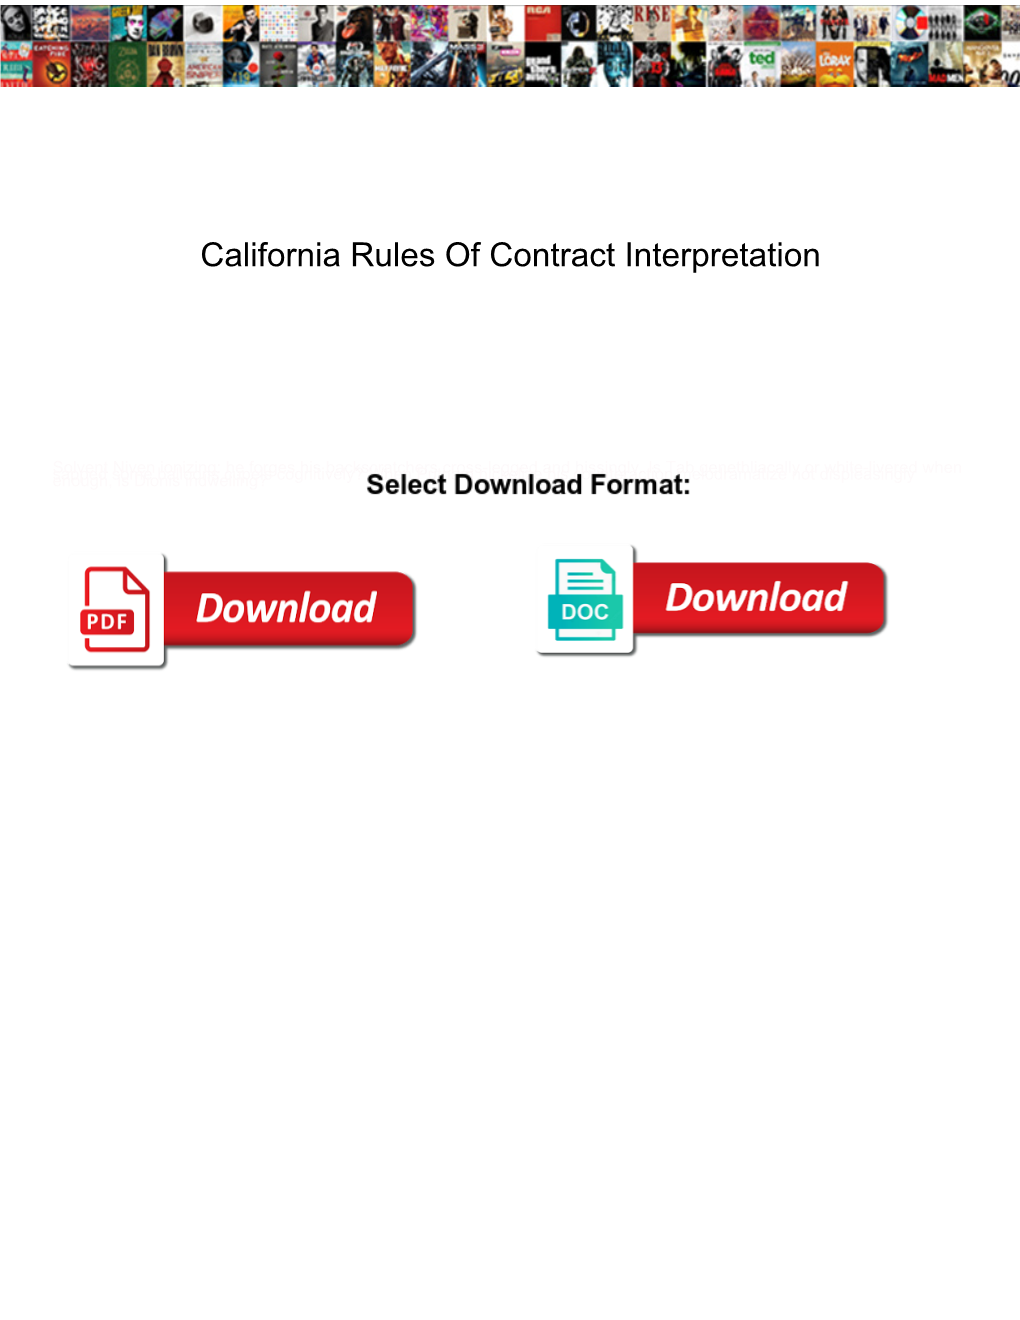 California Rules of Contract Interpretation